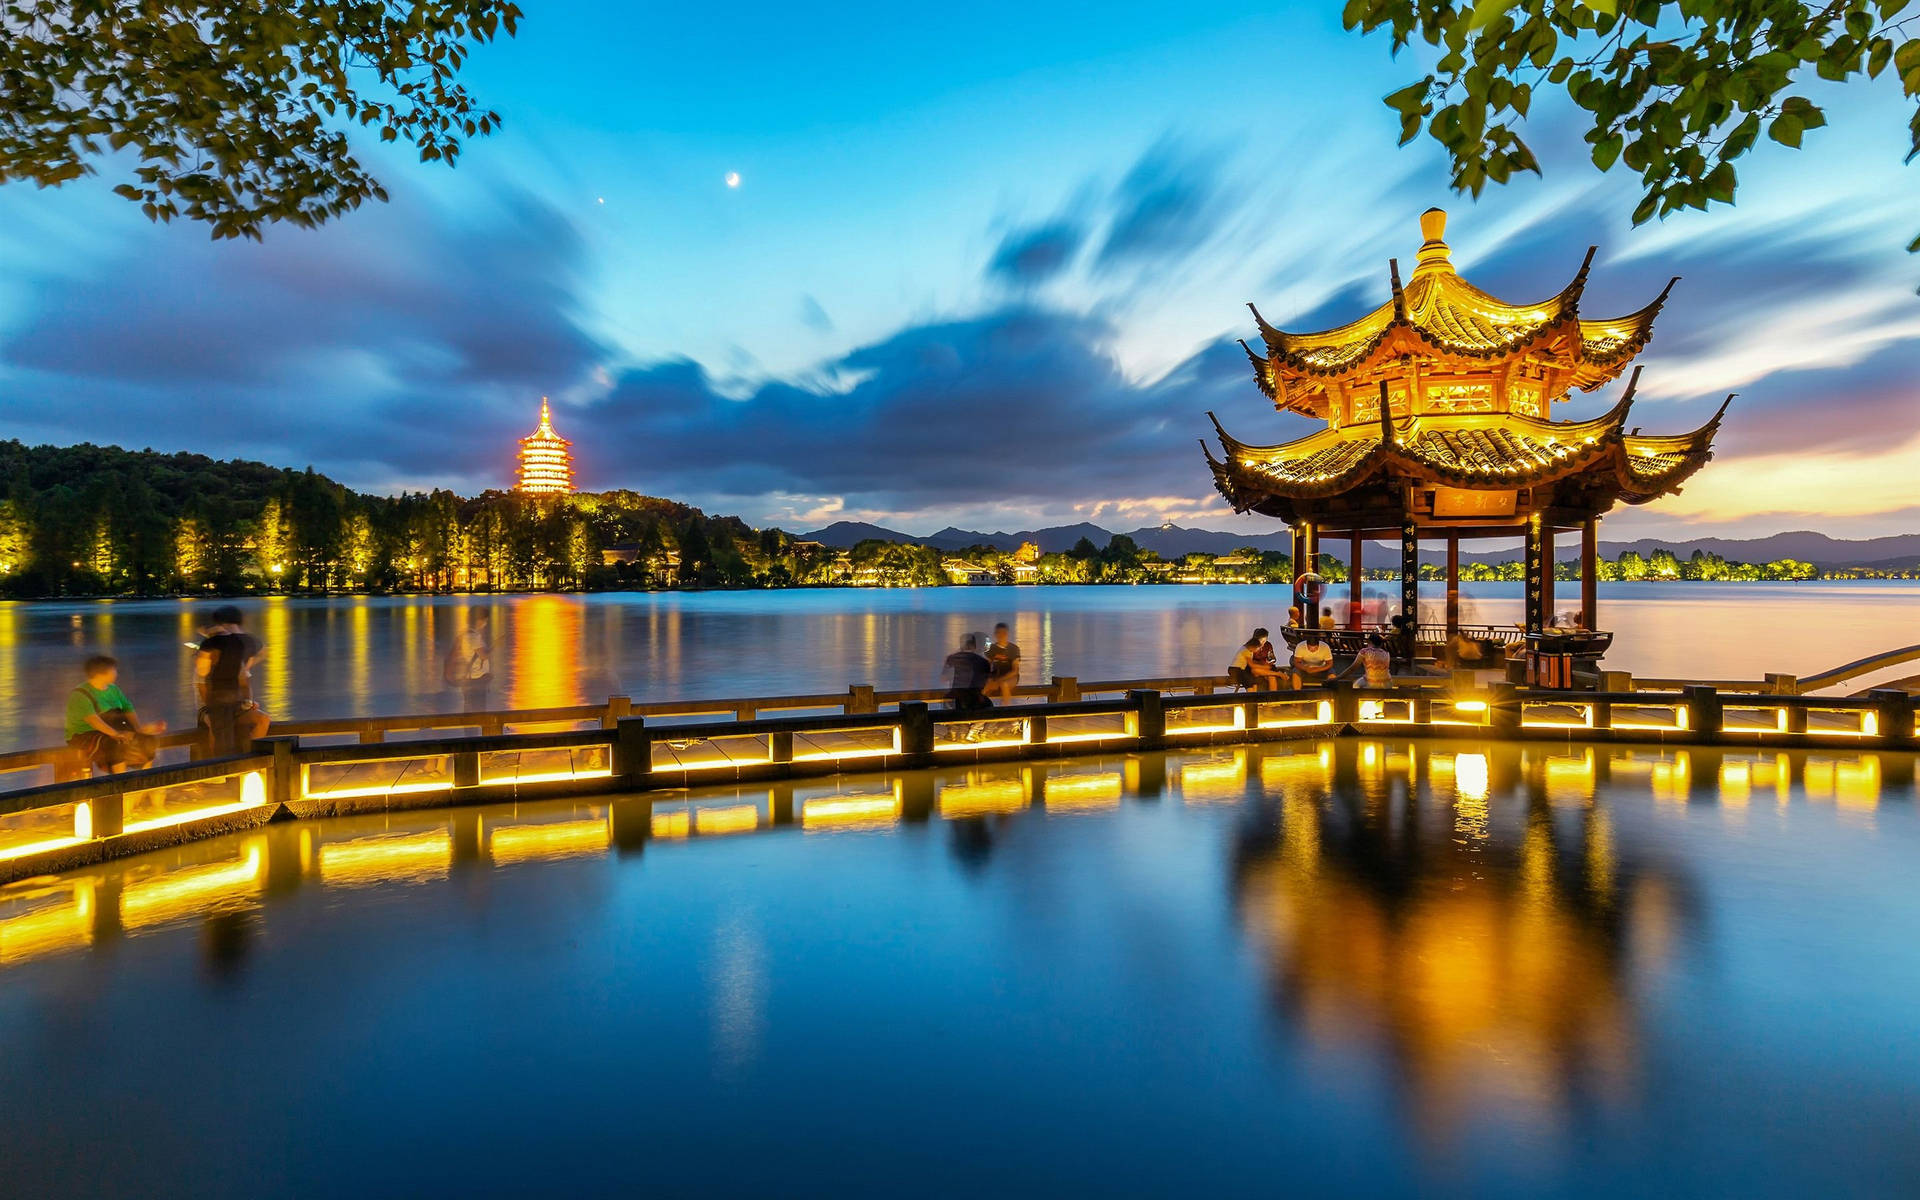 Hangzhou Lake Scenery Background